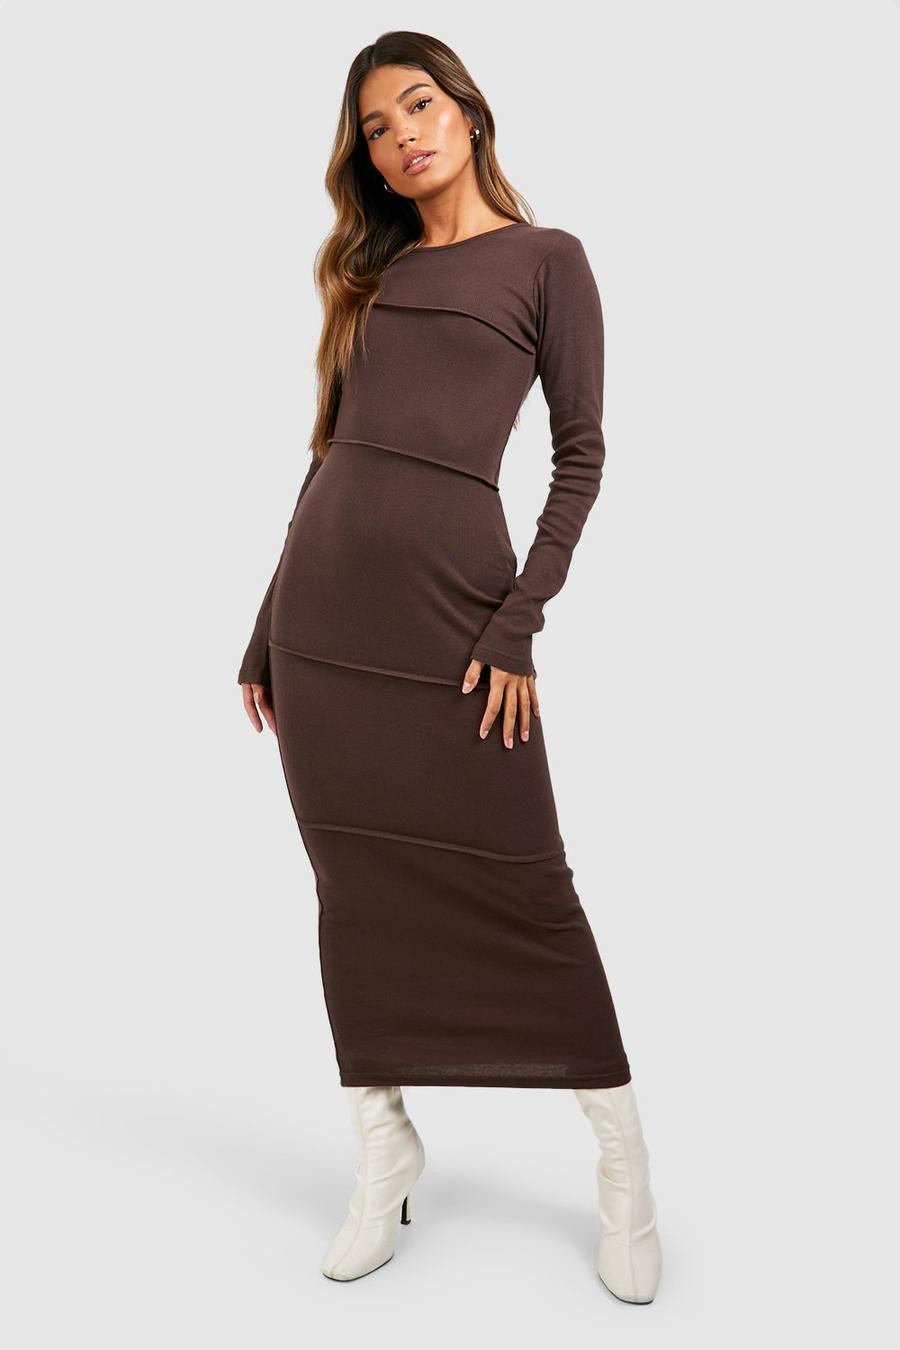 Chocolate Long Sleeve Seam Detail Midaxi Dress